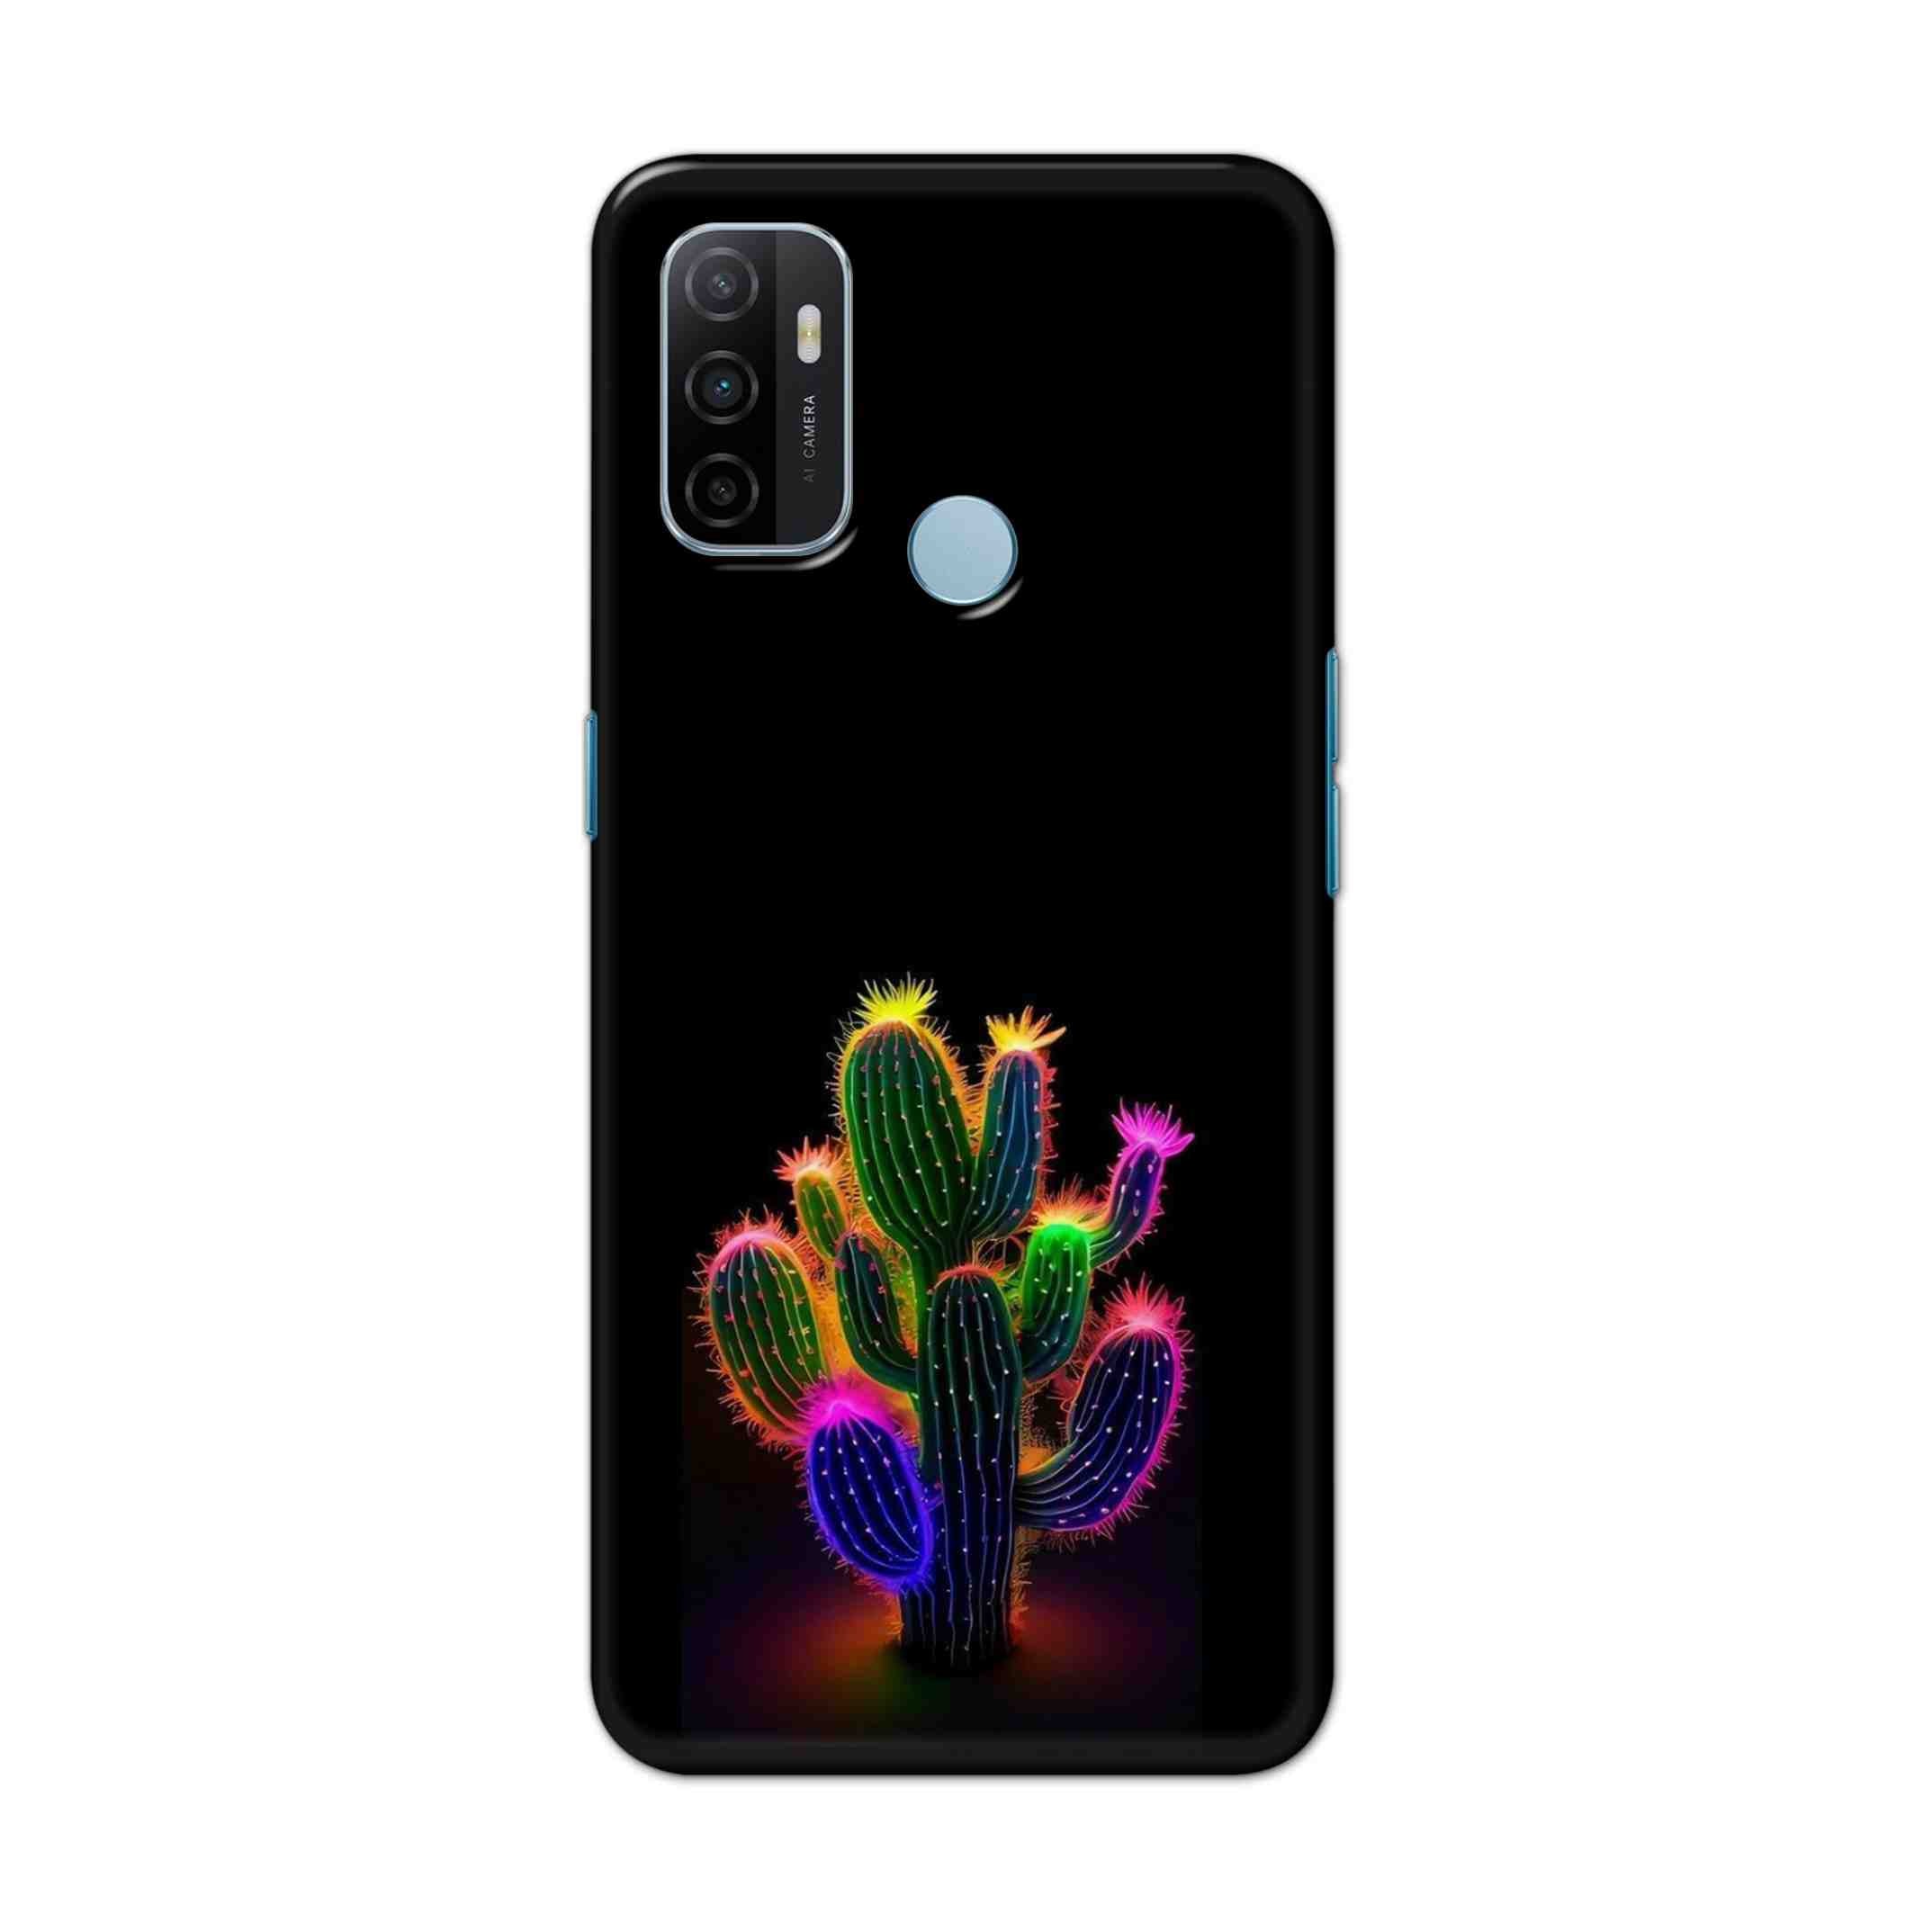 Buy Neon Flower Hard Back Mobile Phone Case Cover For OPPO A53 (2020) Online